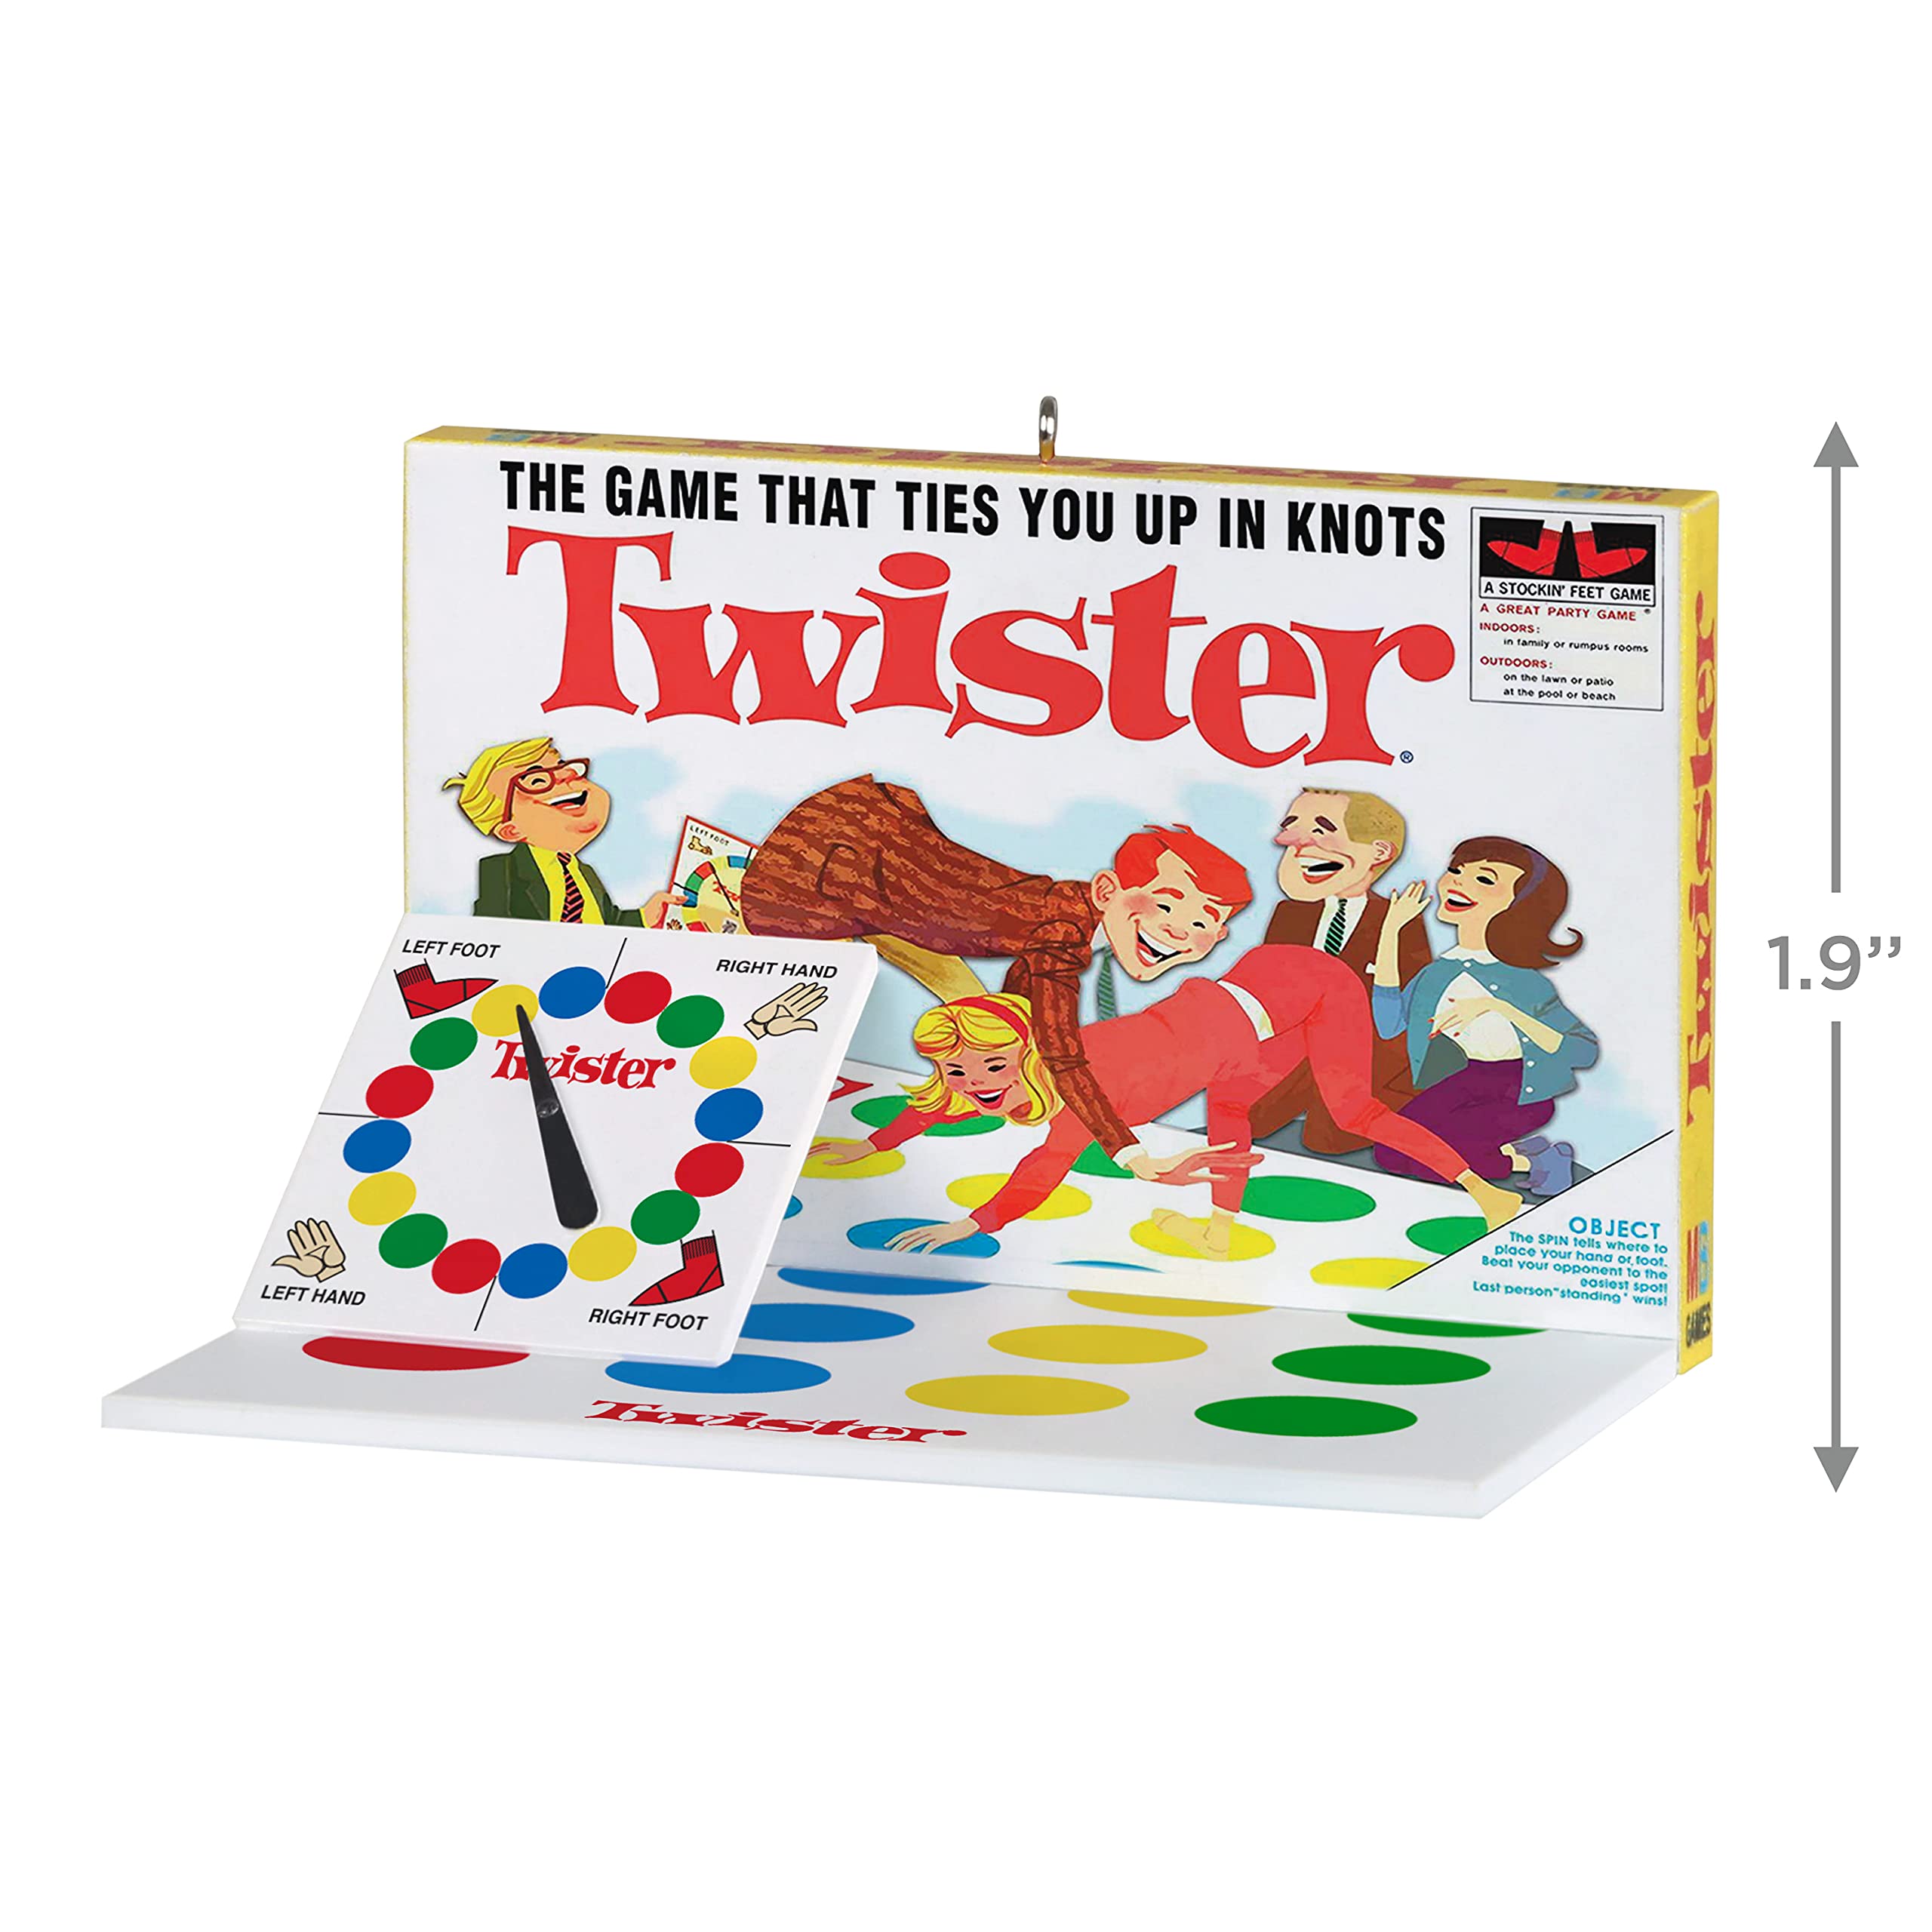 Hallmark Keepsake Christmas Ornament 2021, Hasbro Twister Family Game Night